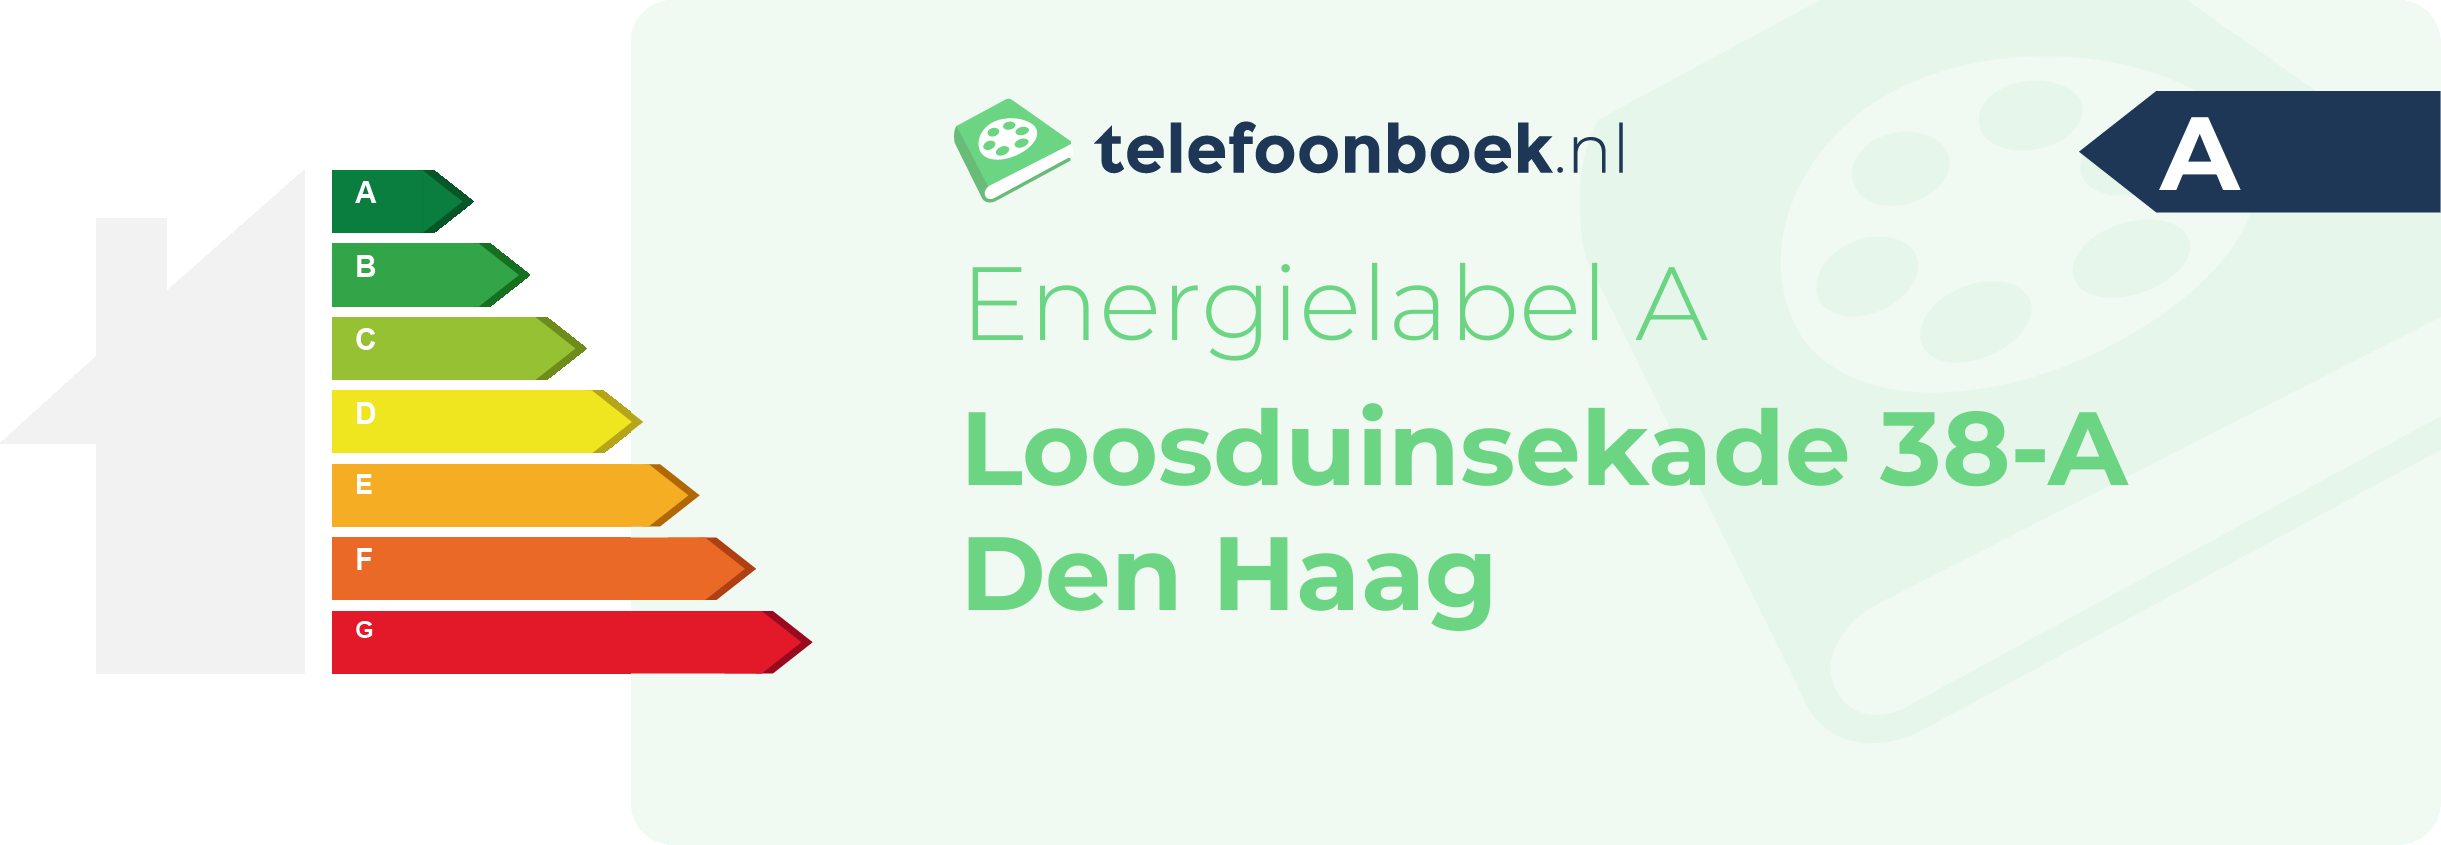 Energielabel Loosduinsekade 38-A Den Haag